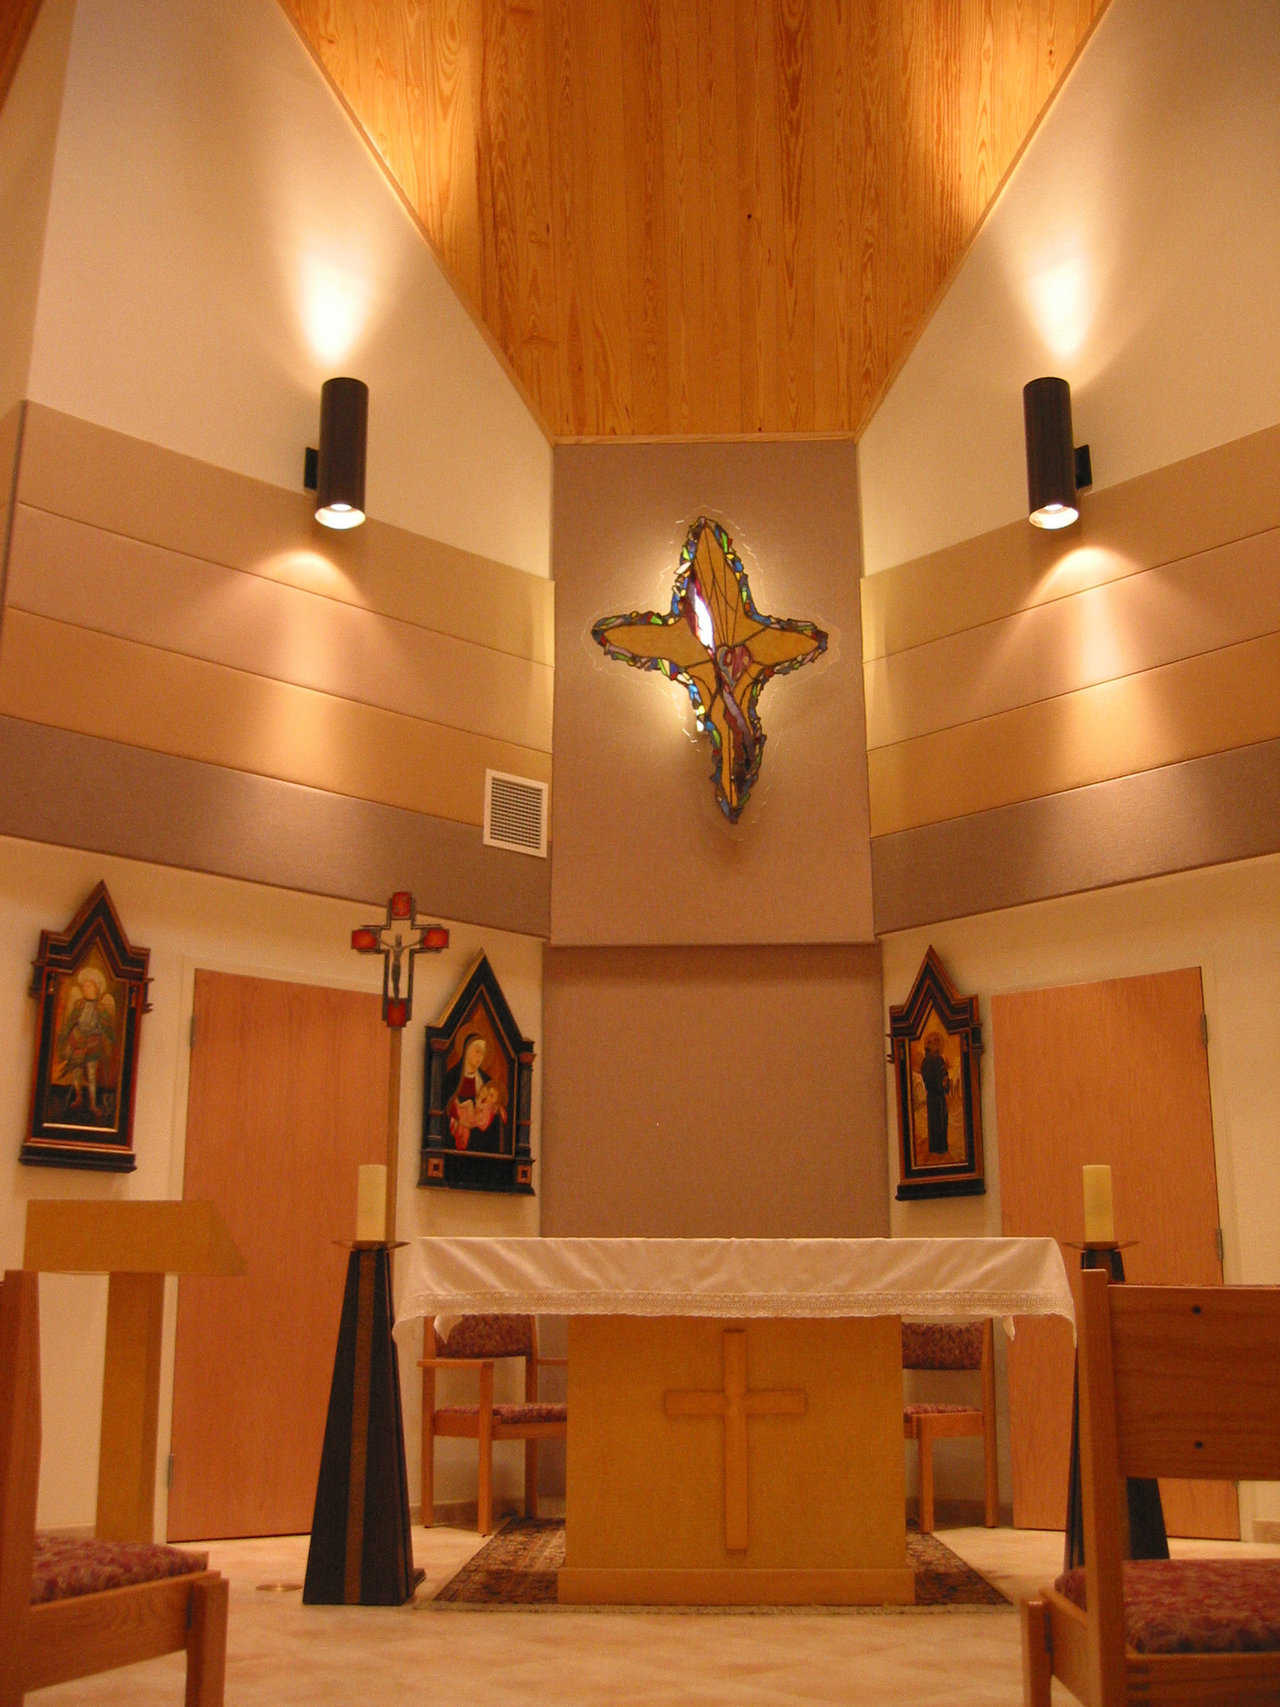 Chapel — Religious art, wood and ceramic tile enhance the school chapel.